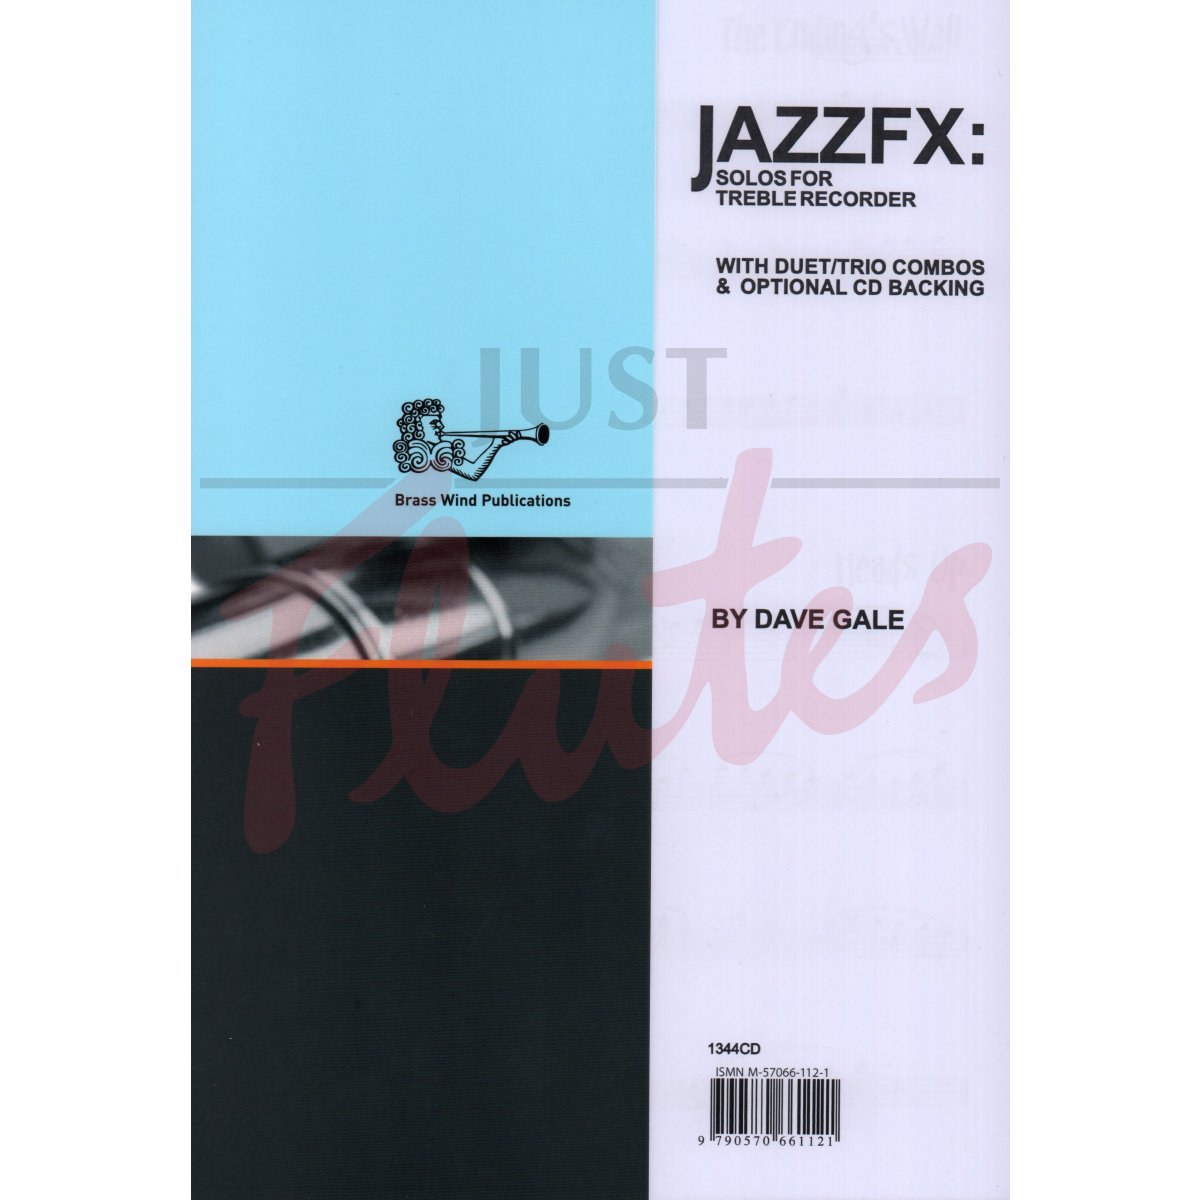 JazzFX for Treble Recorder